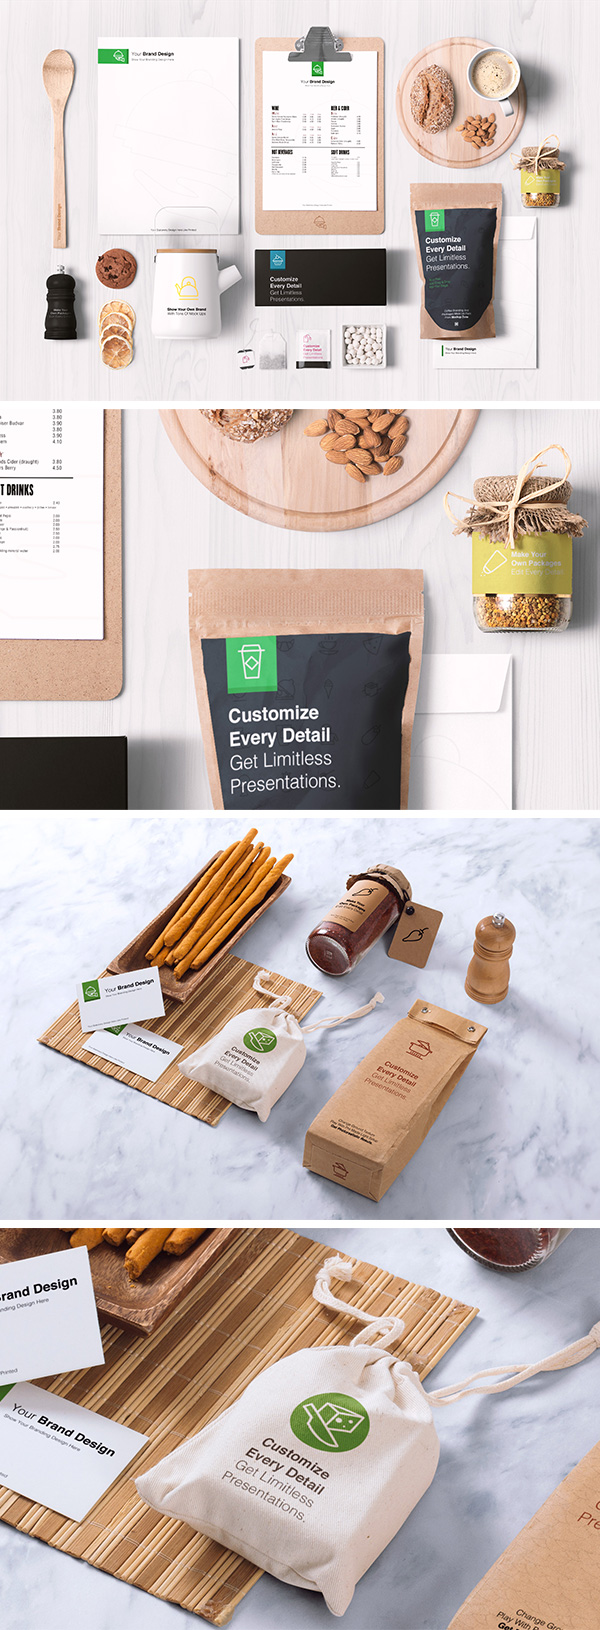 Download Food Packaging & Branding MockUp Template PSD - LTHEME